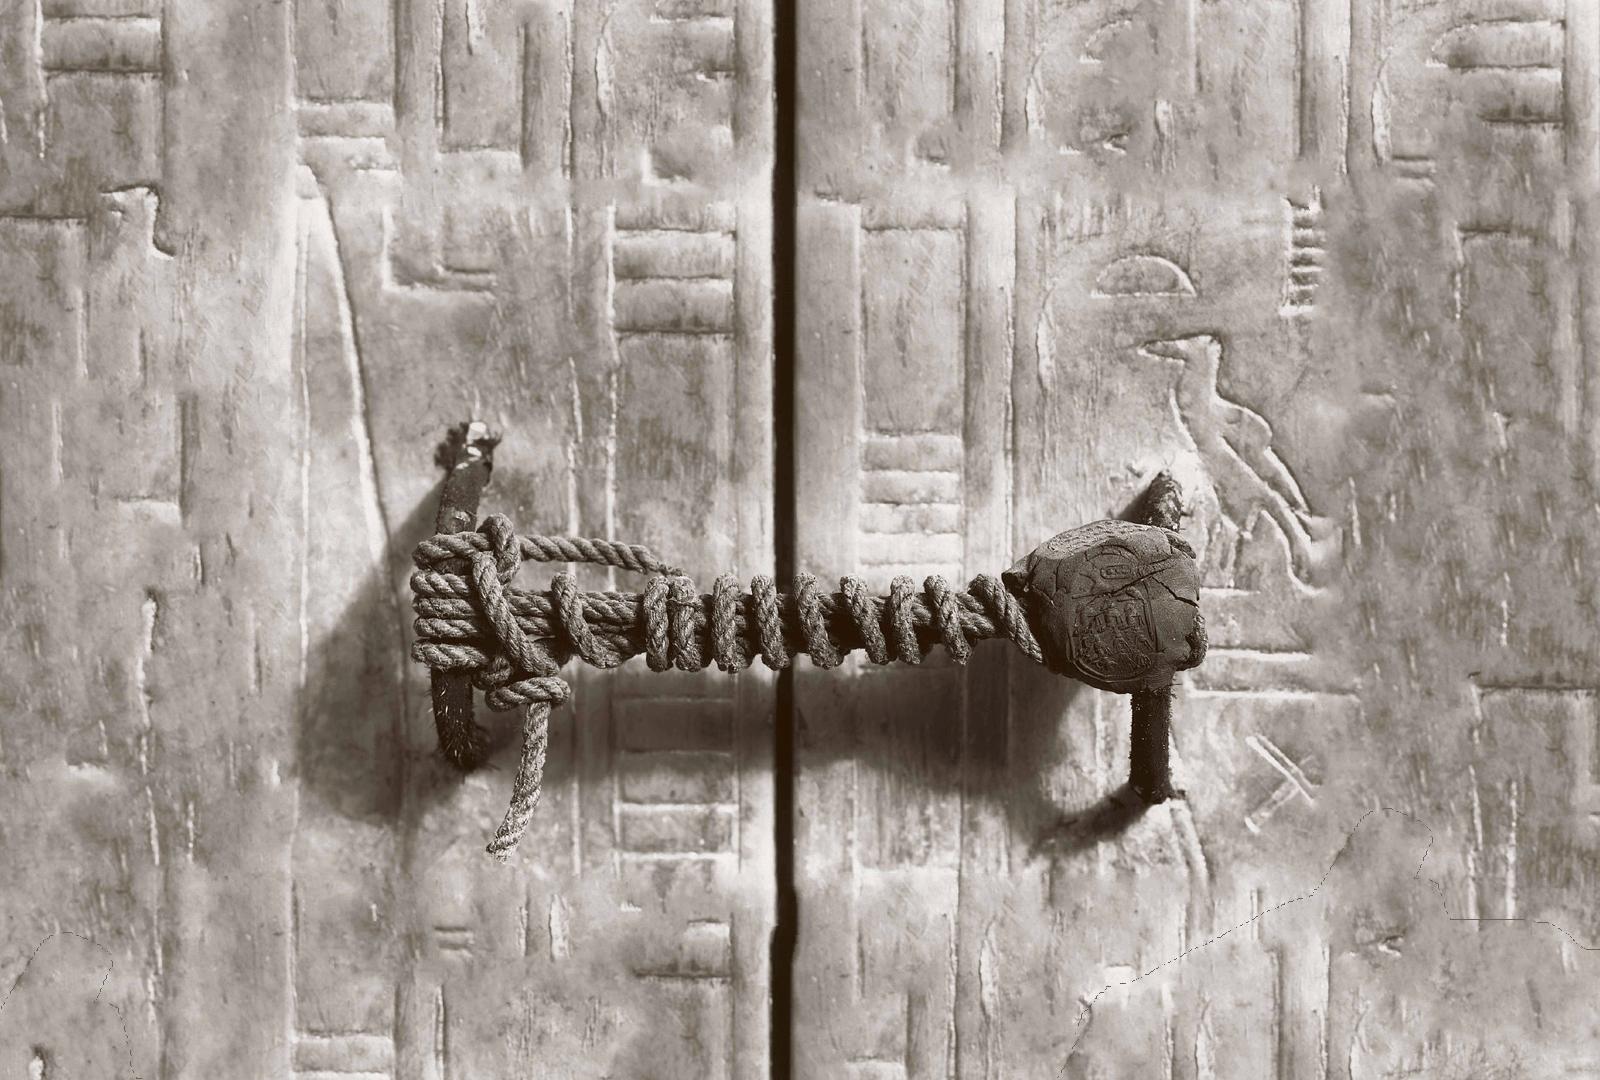 Museum of Artifacts: Breaking the seal on Tutankhamun's tomb